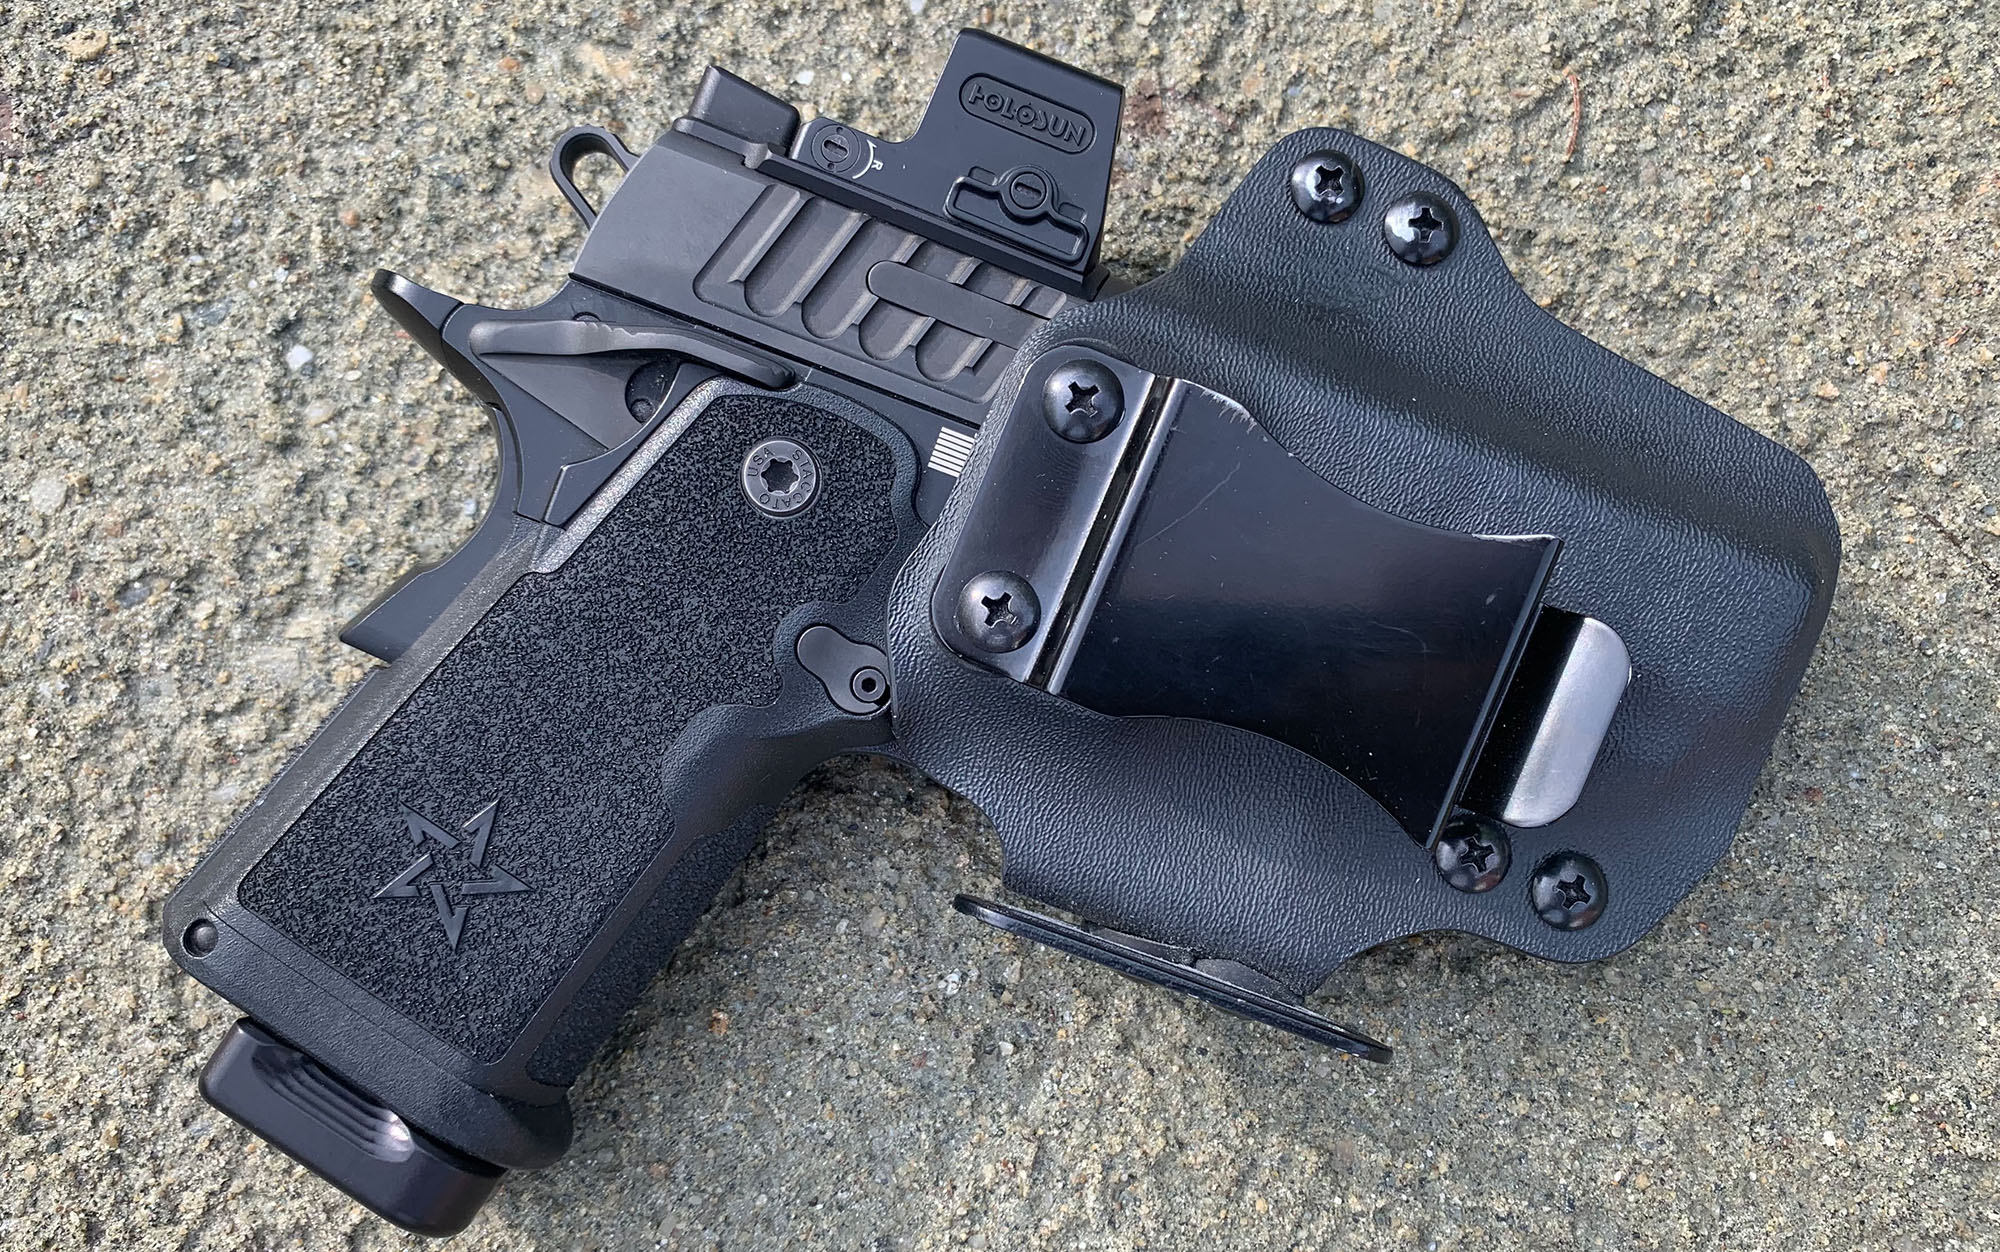 Universal Shoulder Gun Holster Concealed Carry For Men Women Fit All  Firearms